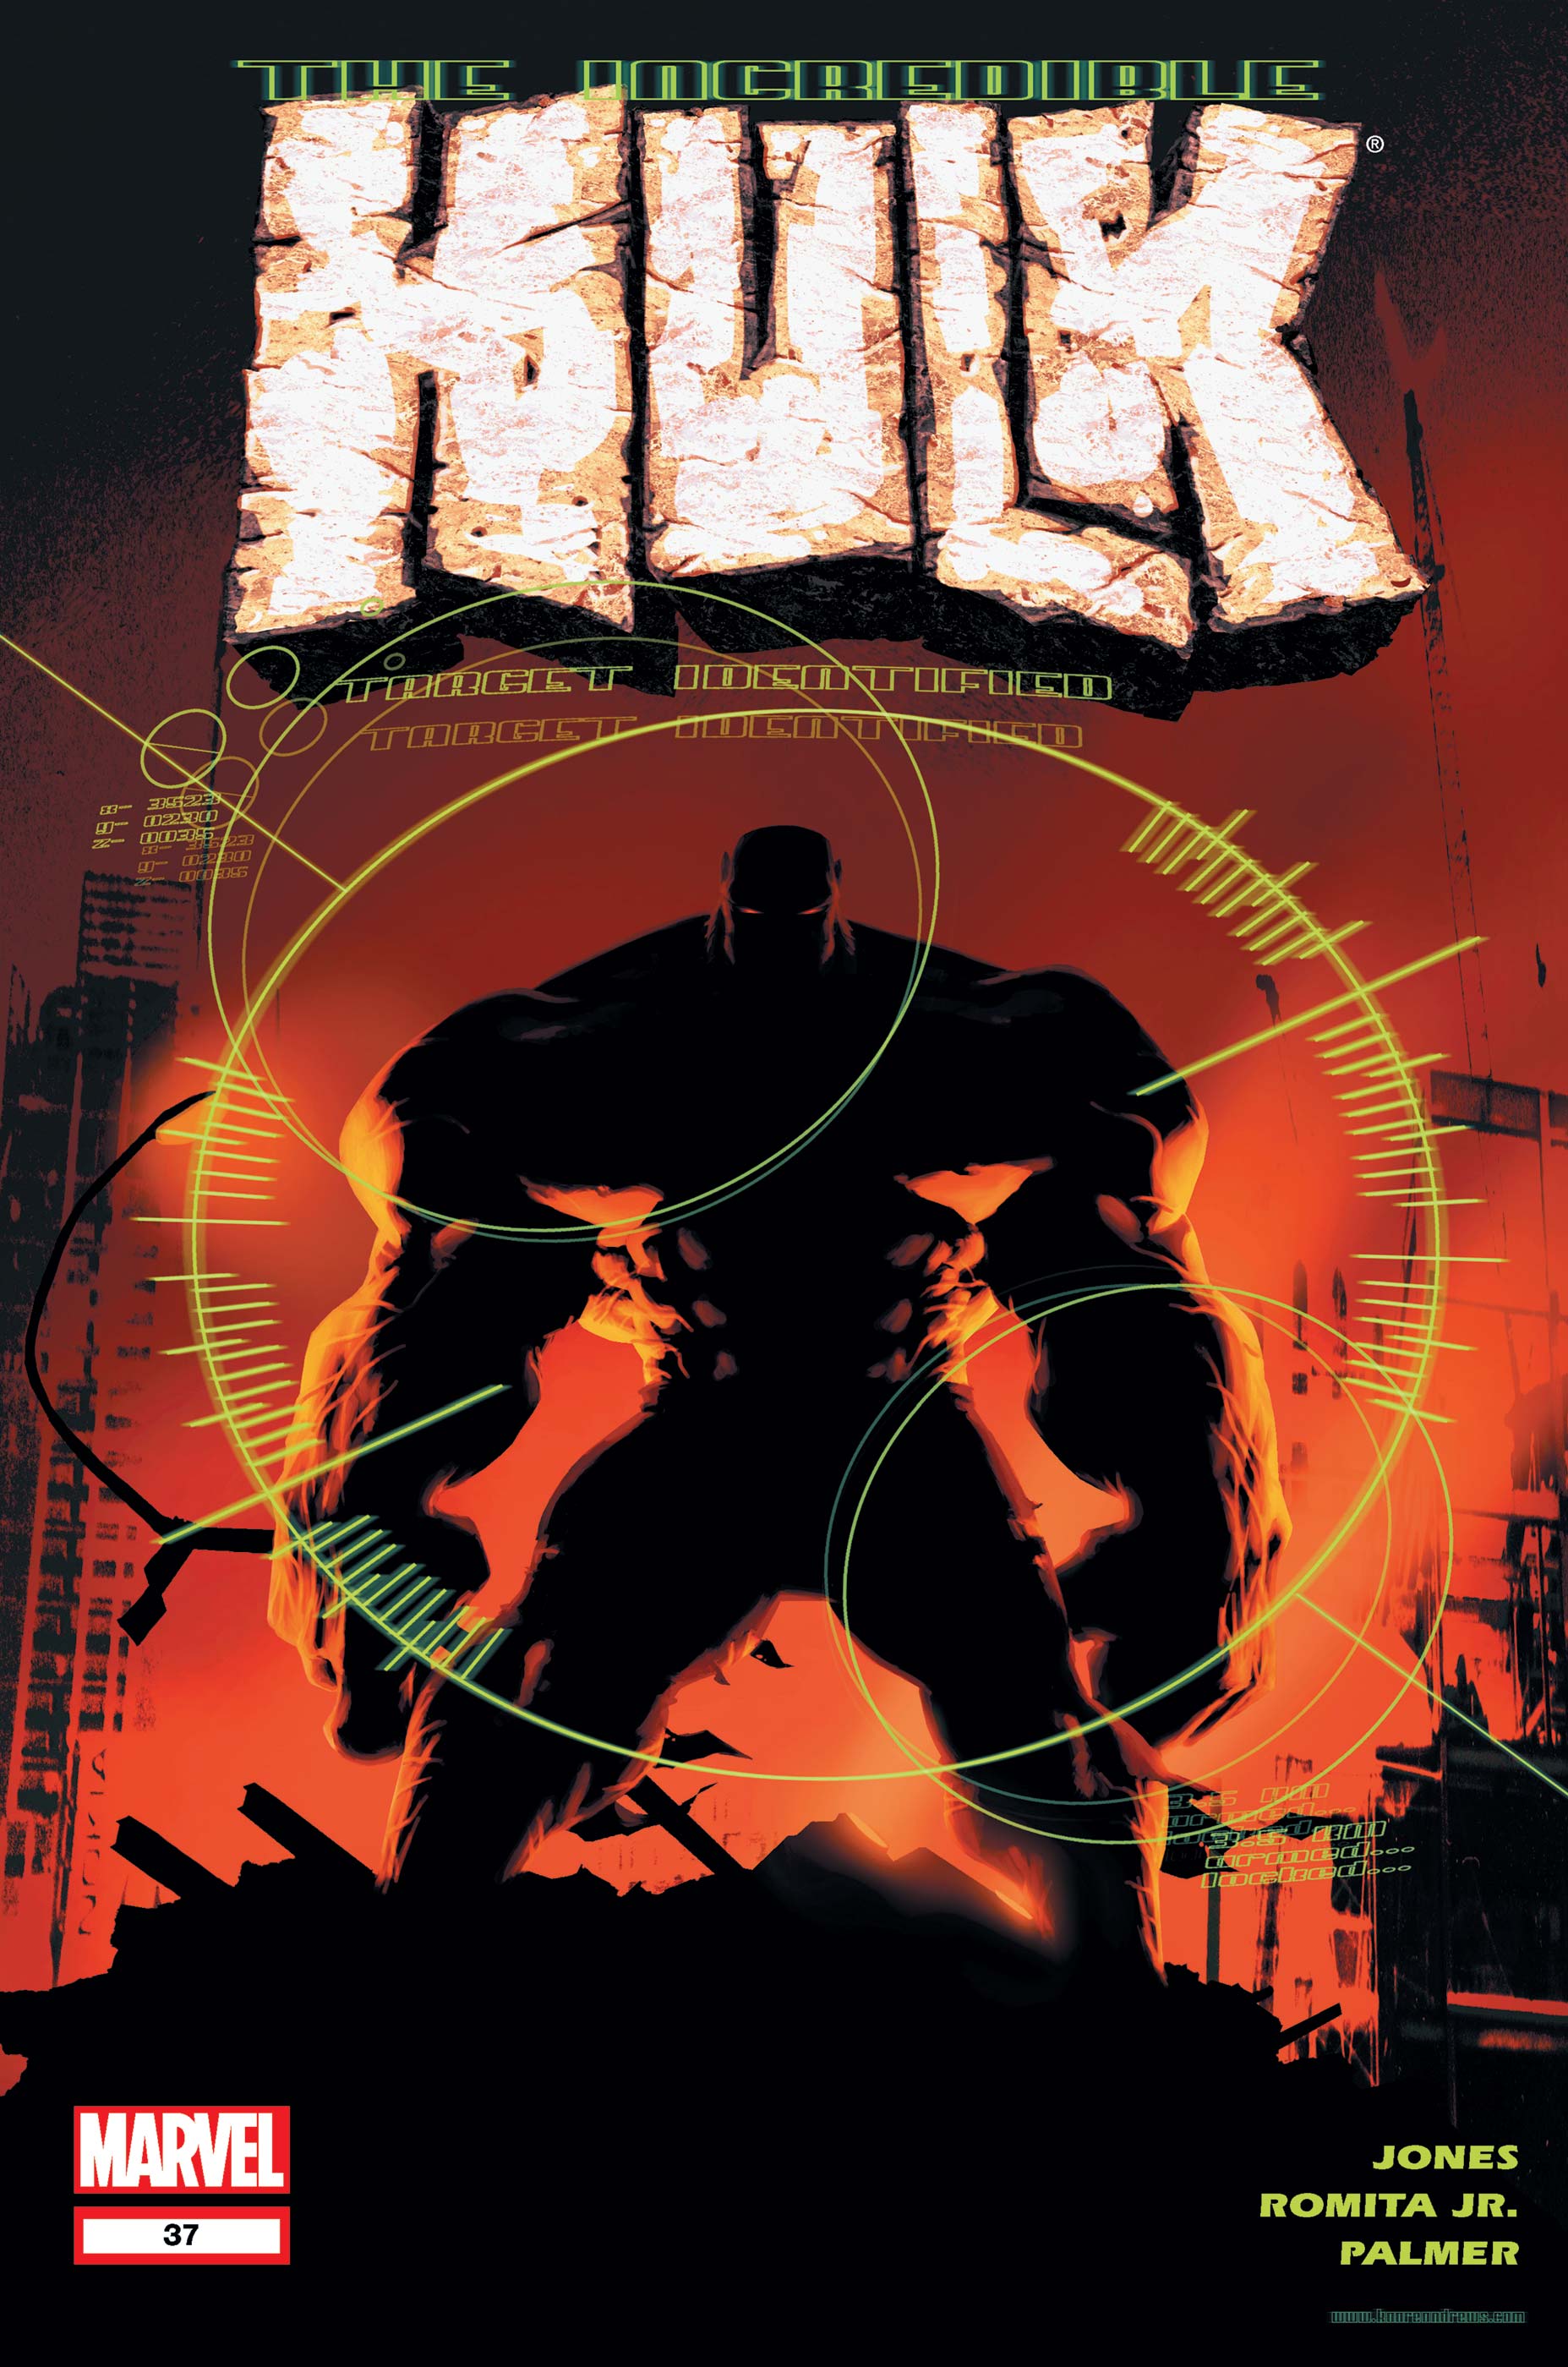 Incredible Hulk Vol. I: Return of the Monster (Trade Paperback)